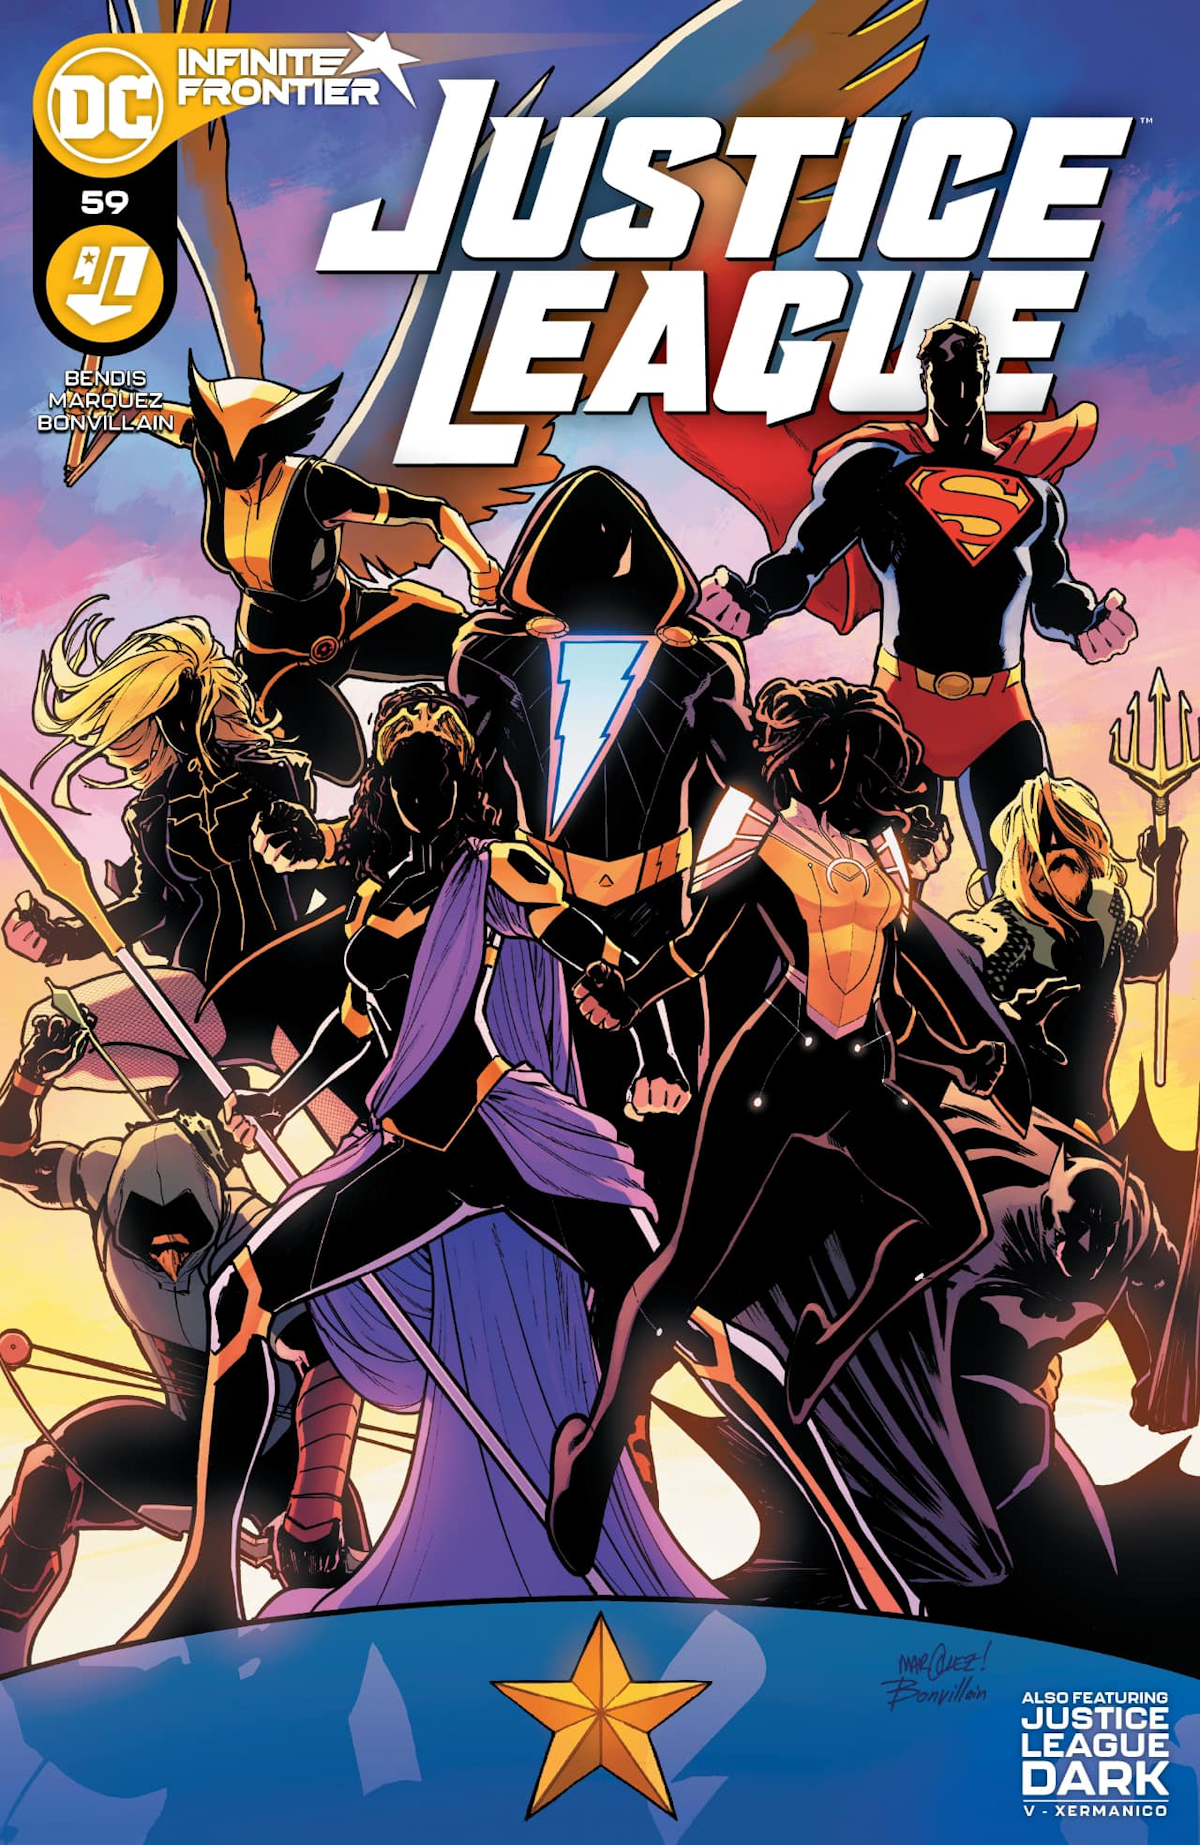 Justice League Vol. 4 59 (Cover A)